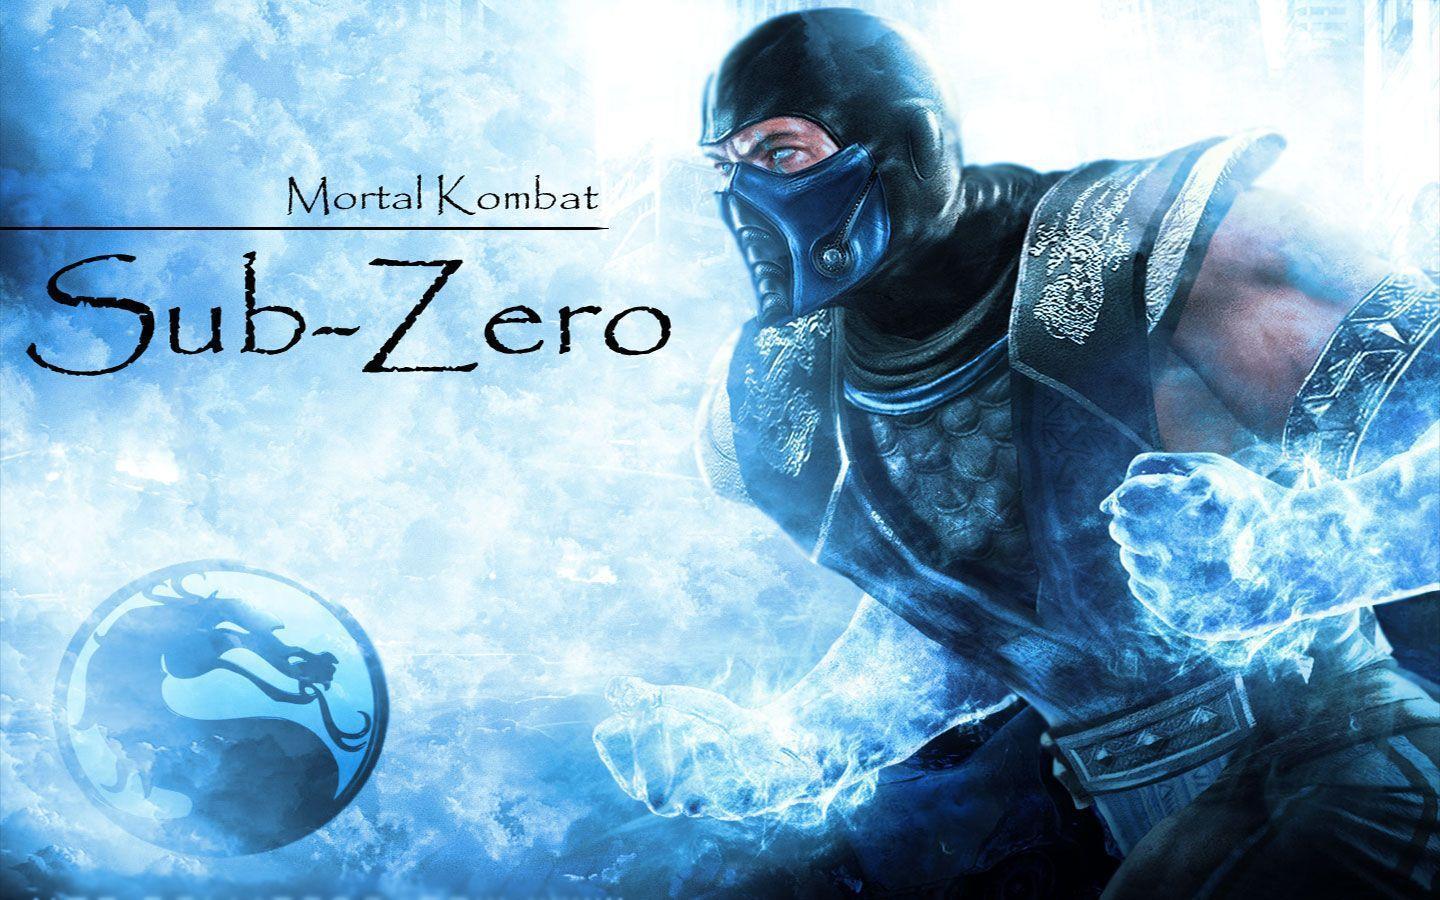 Image For > Mortal Kombat Deception Sub Zero Wallpapers